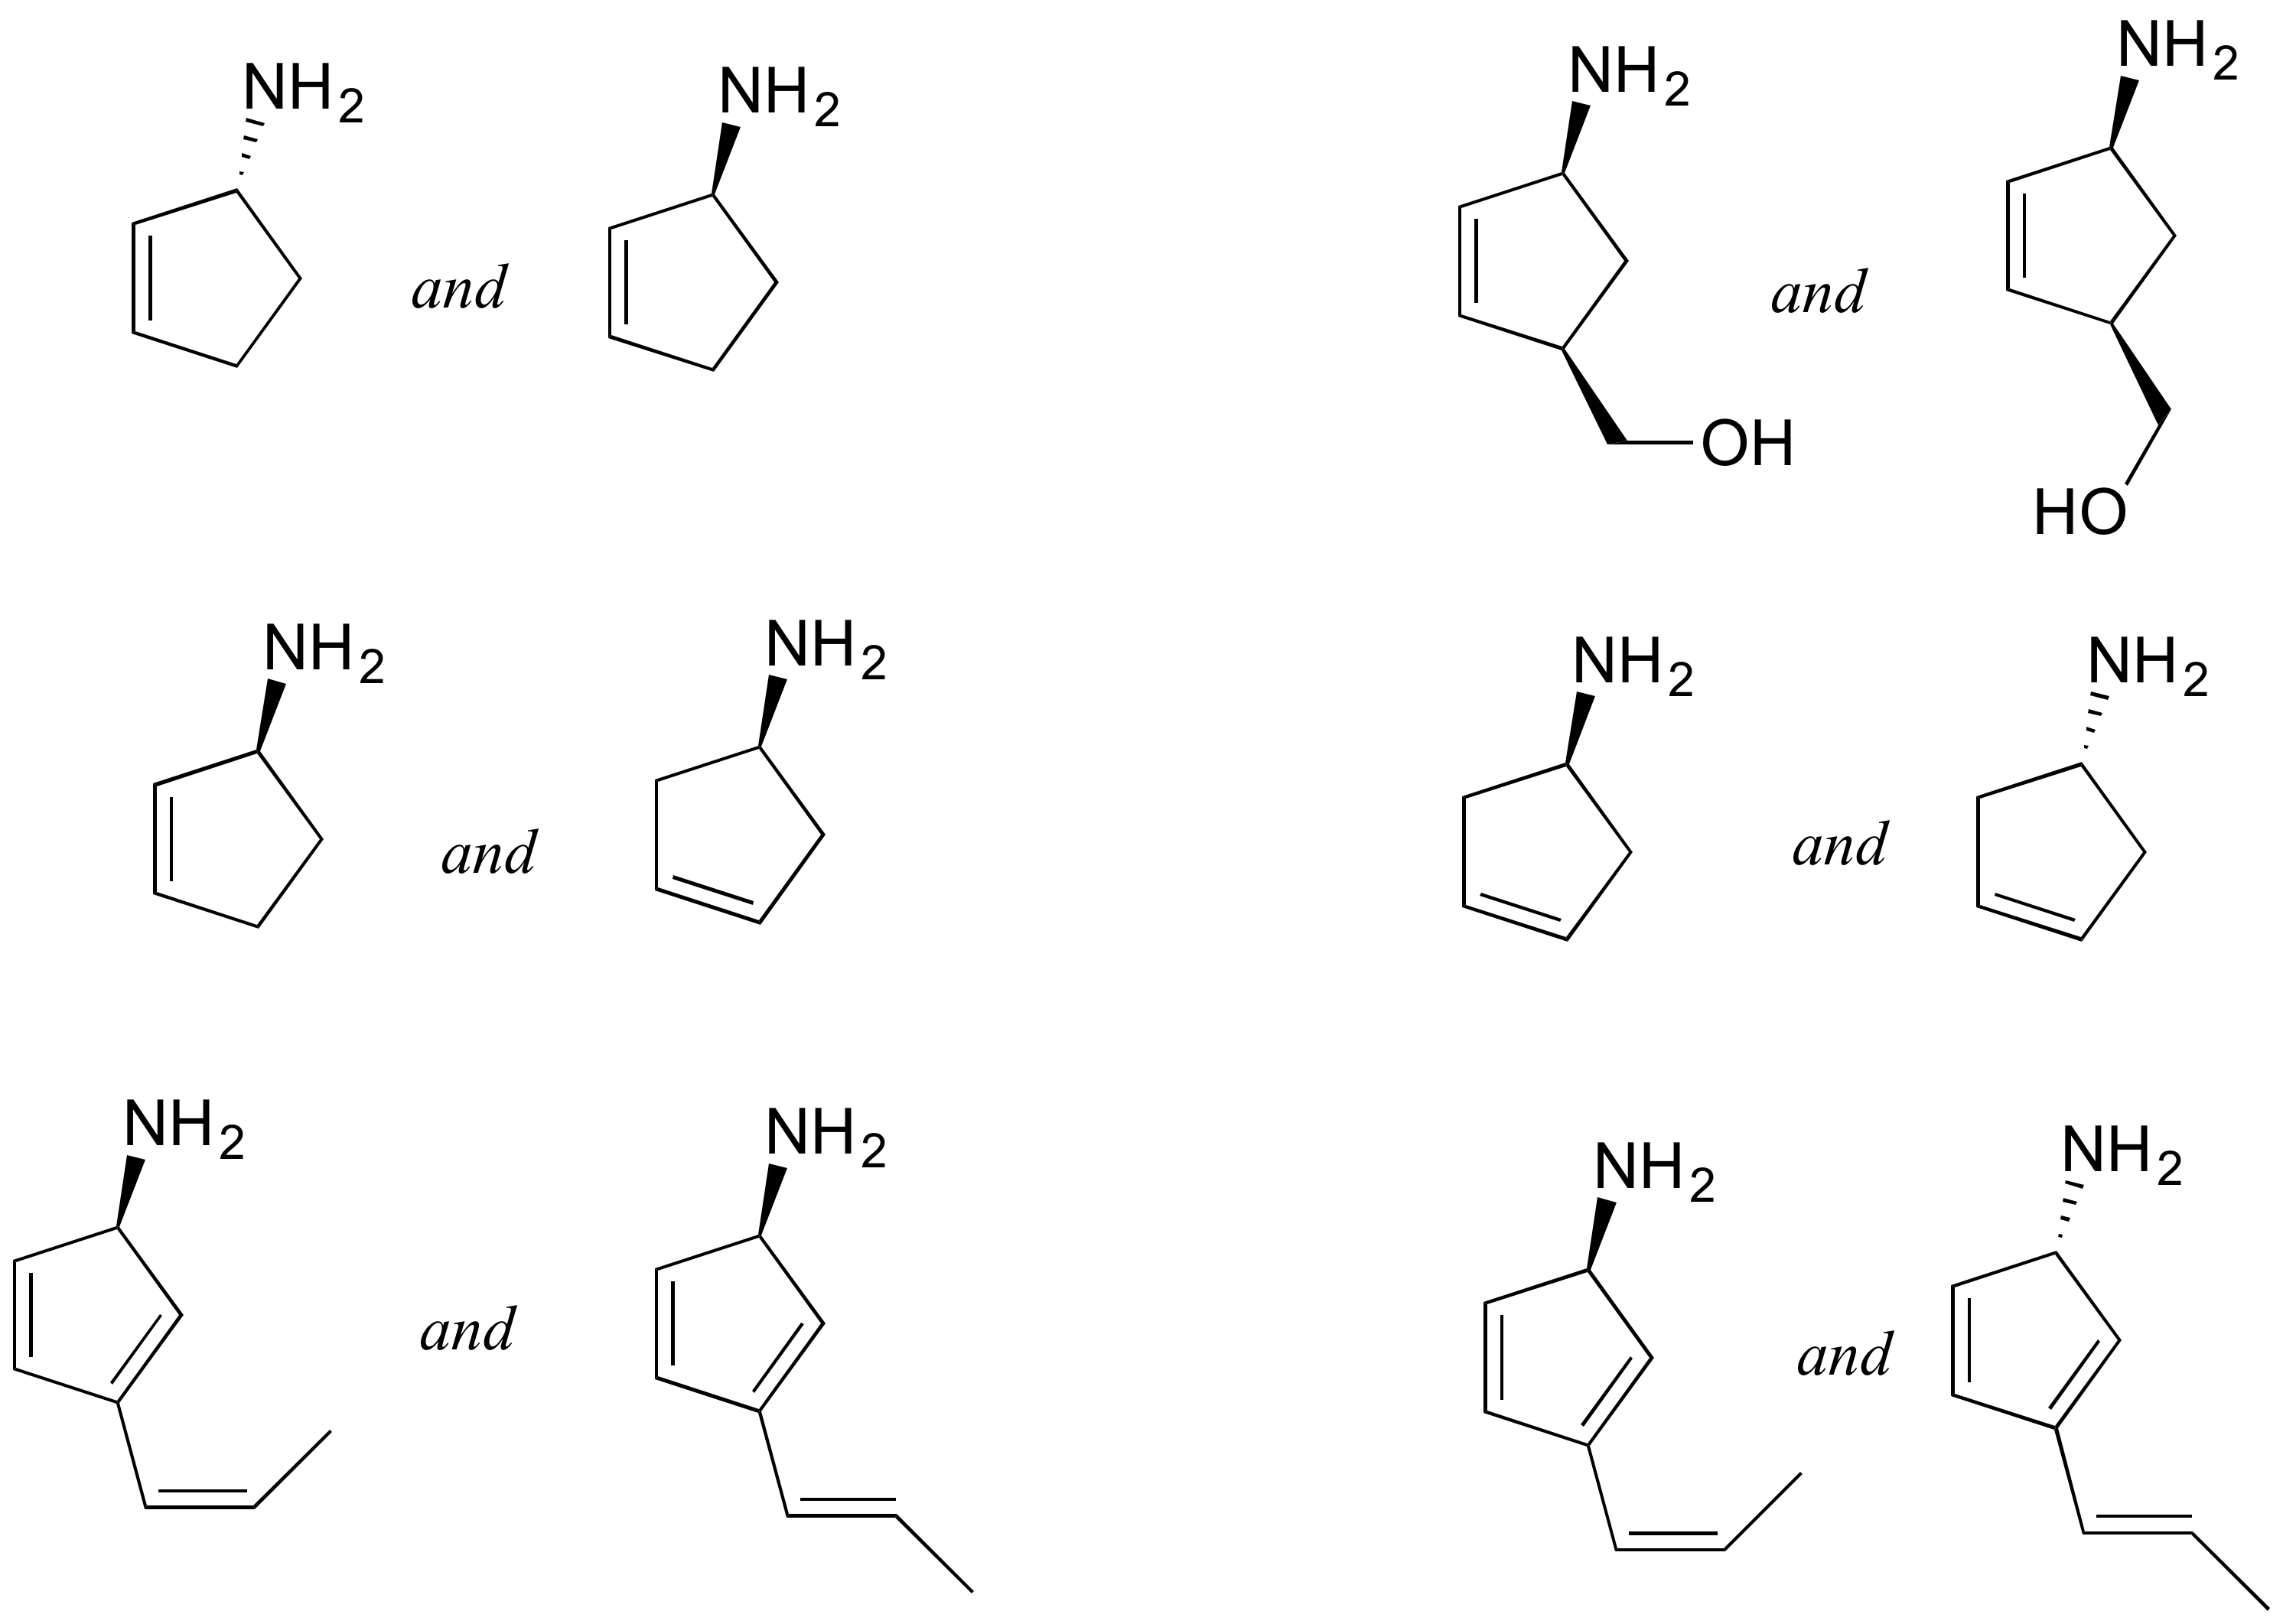 Six sets of cyclic molecules with amino groups.